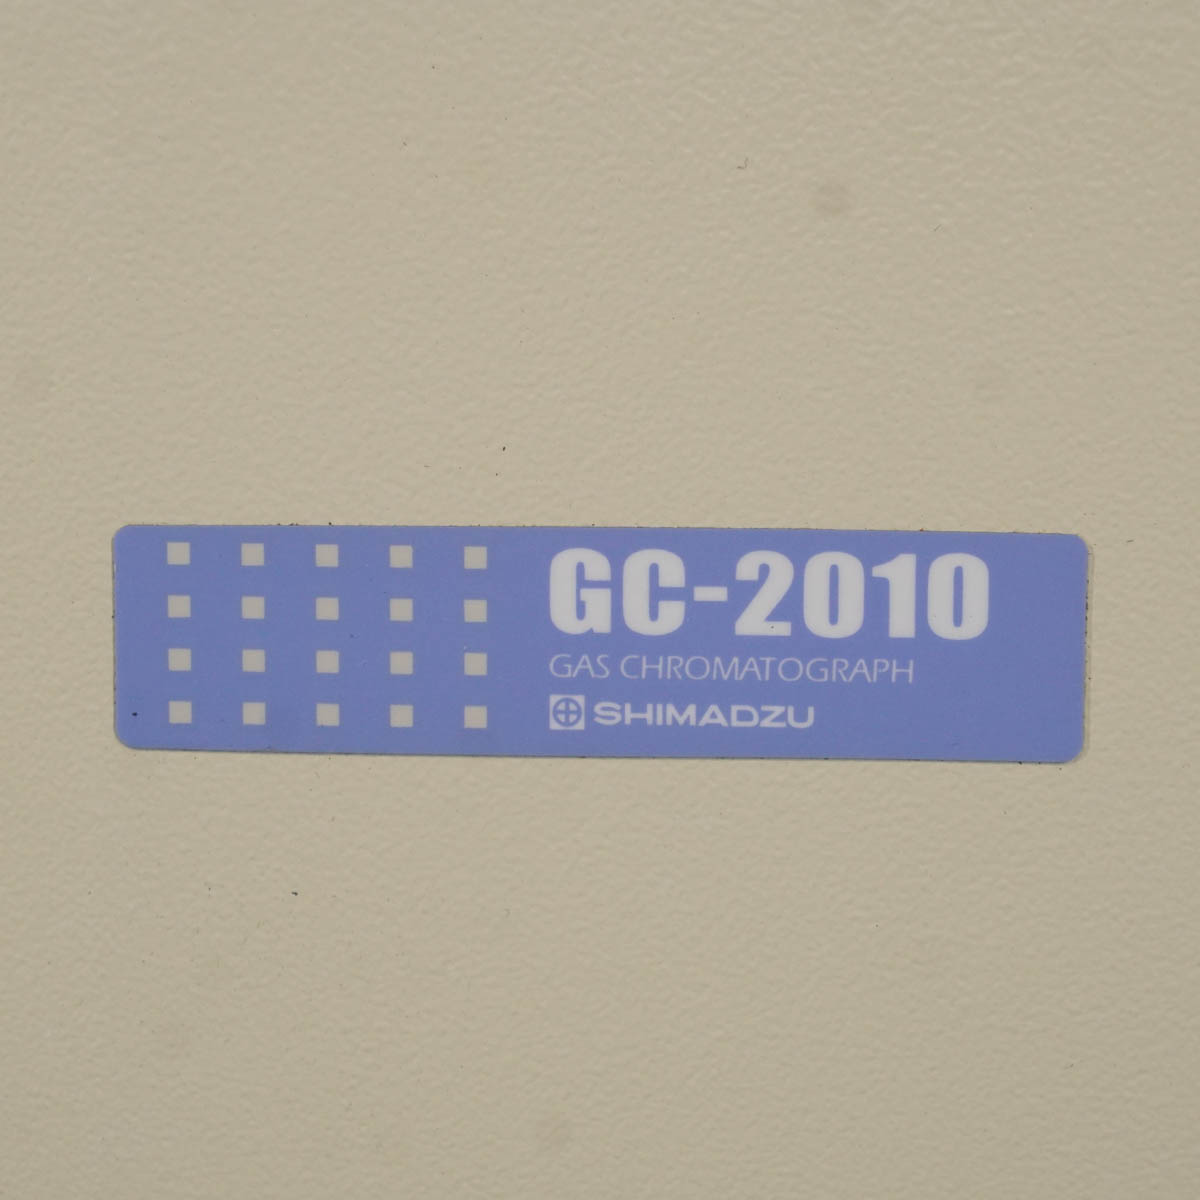 DW]USED 8日保証 セット SHIMADZU QP-2010 GCMS-QP2010 GC GAS CHROMATOGRAPH  ガスクロマトグラフ 電源コード ソフトウ...[ST03701-0001] 分析機器,GC(ガスクロマトグラフ)  中古販売分析機器計測器総合商社ディルウィングス